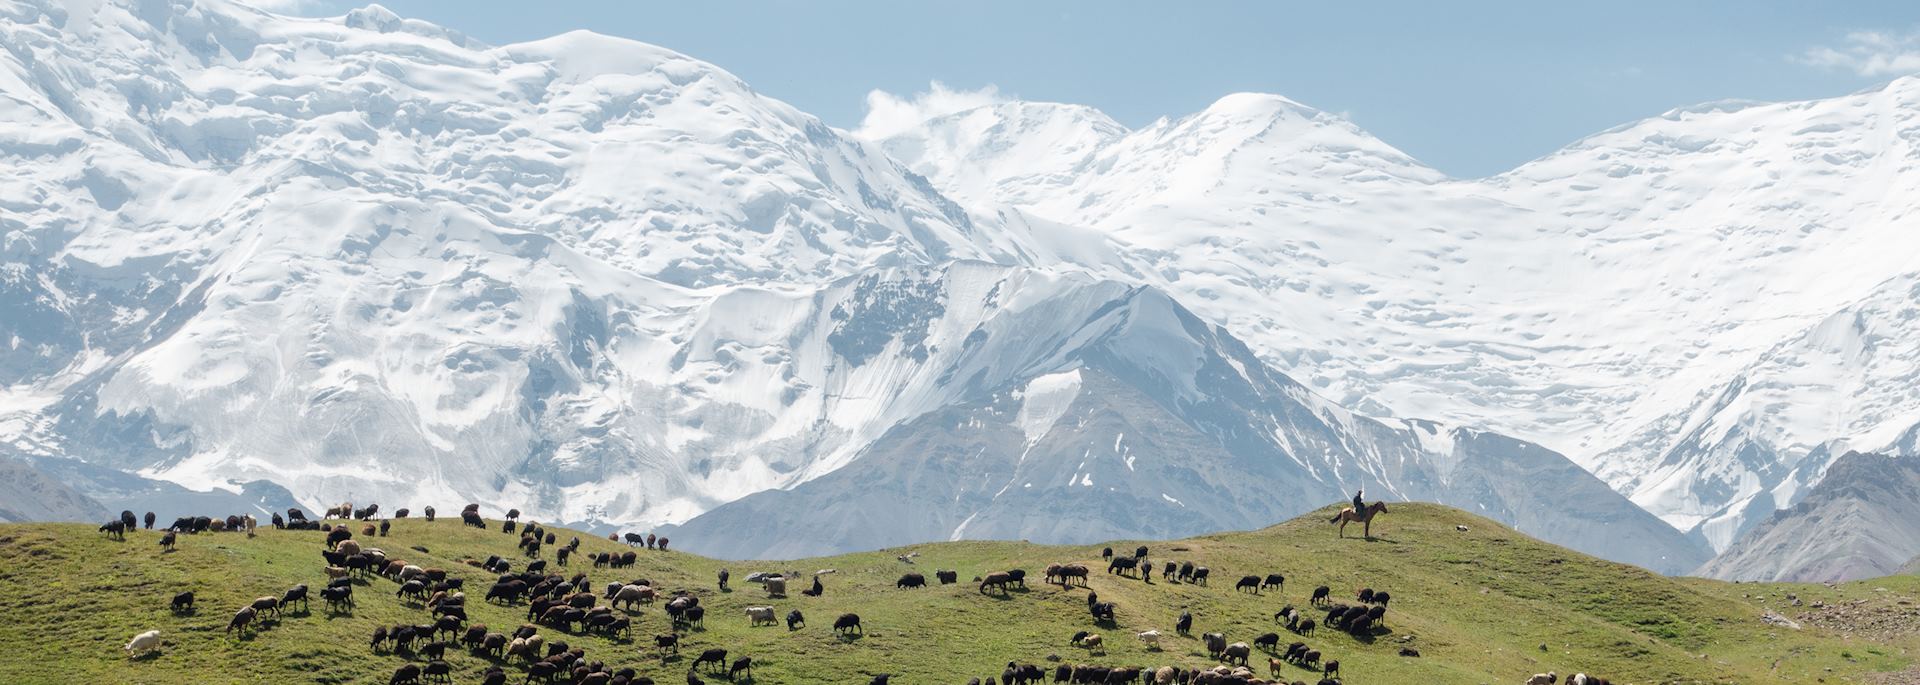 Pamir Mountains in the Osh region